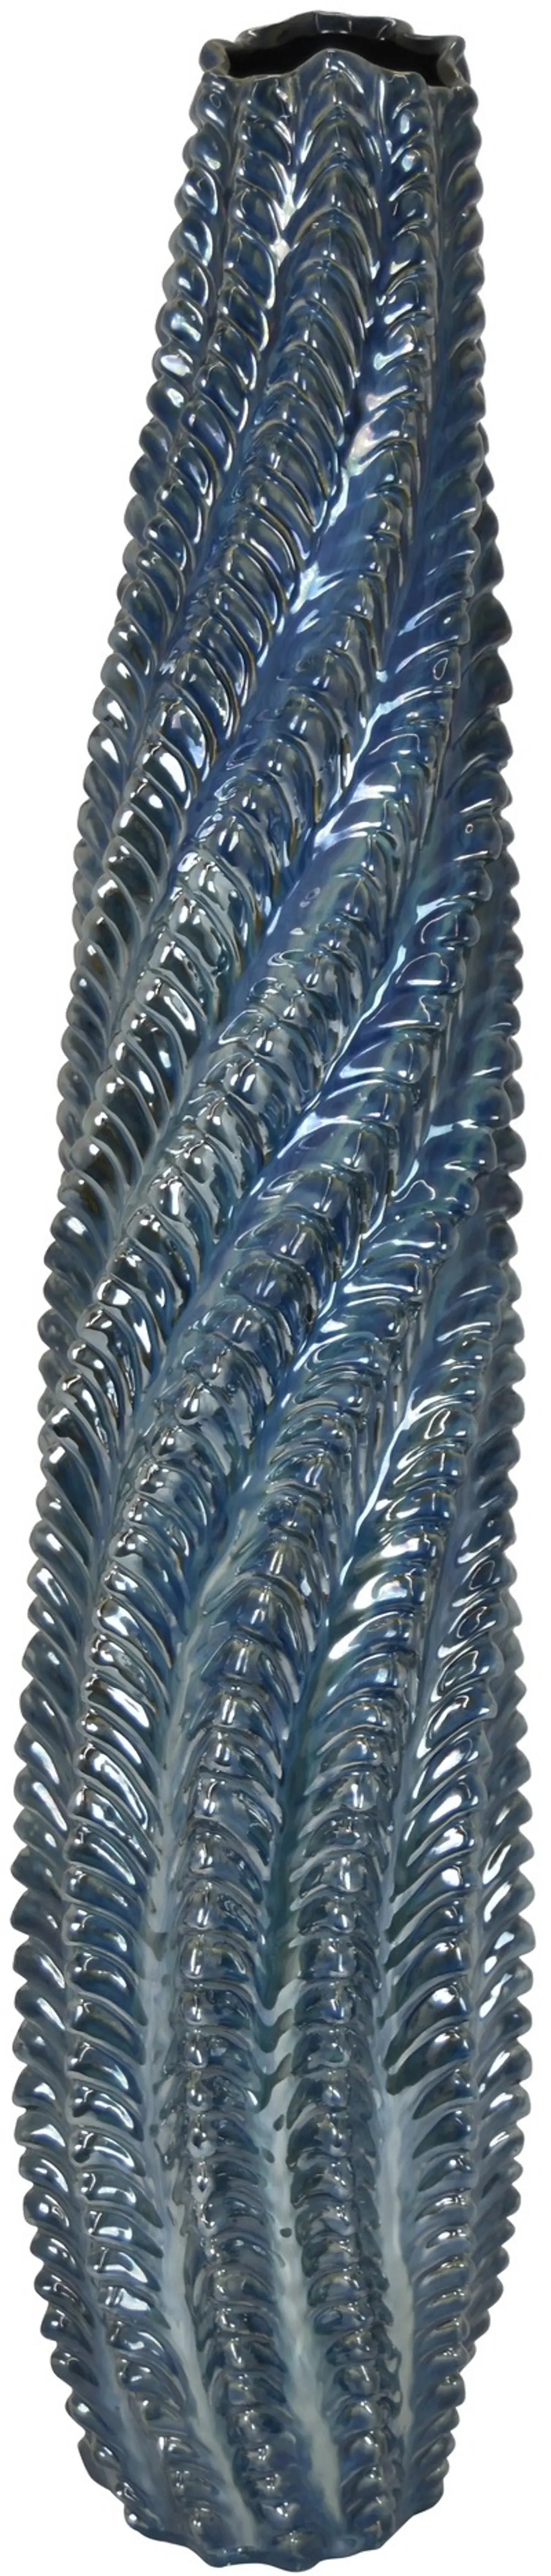 5 Inch Blue Decorative Vase-1